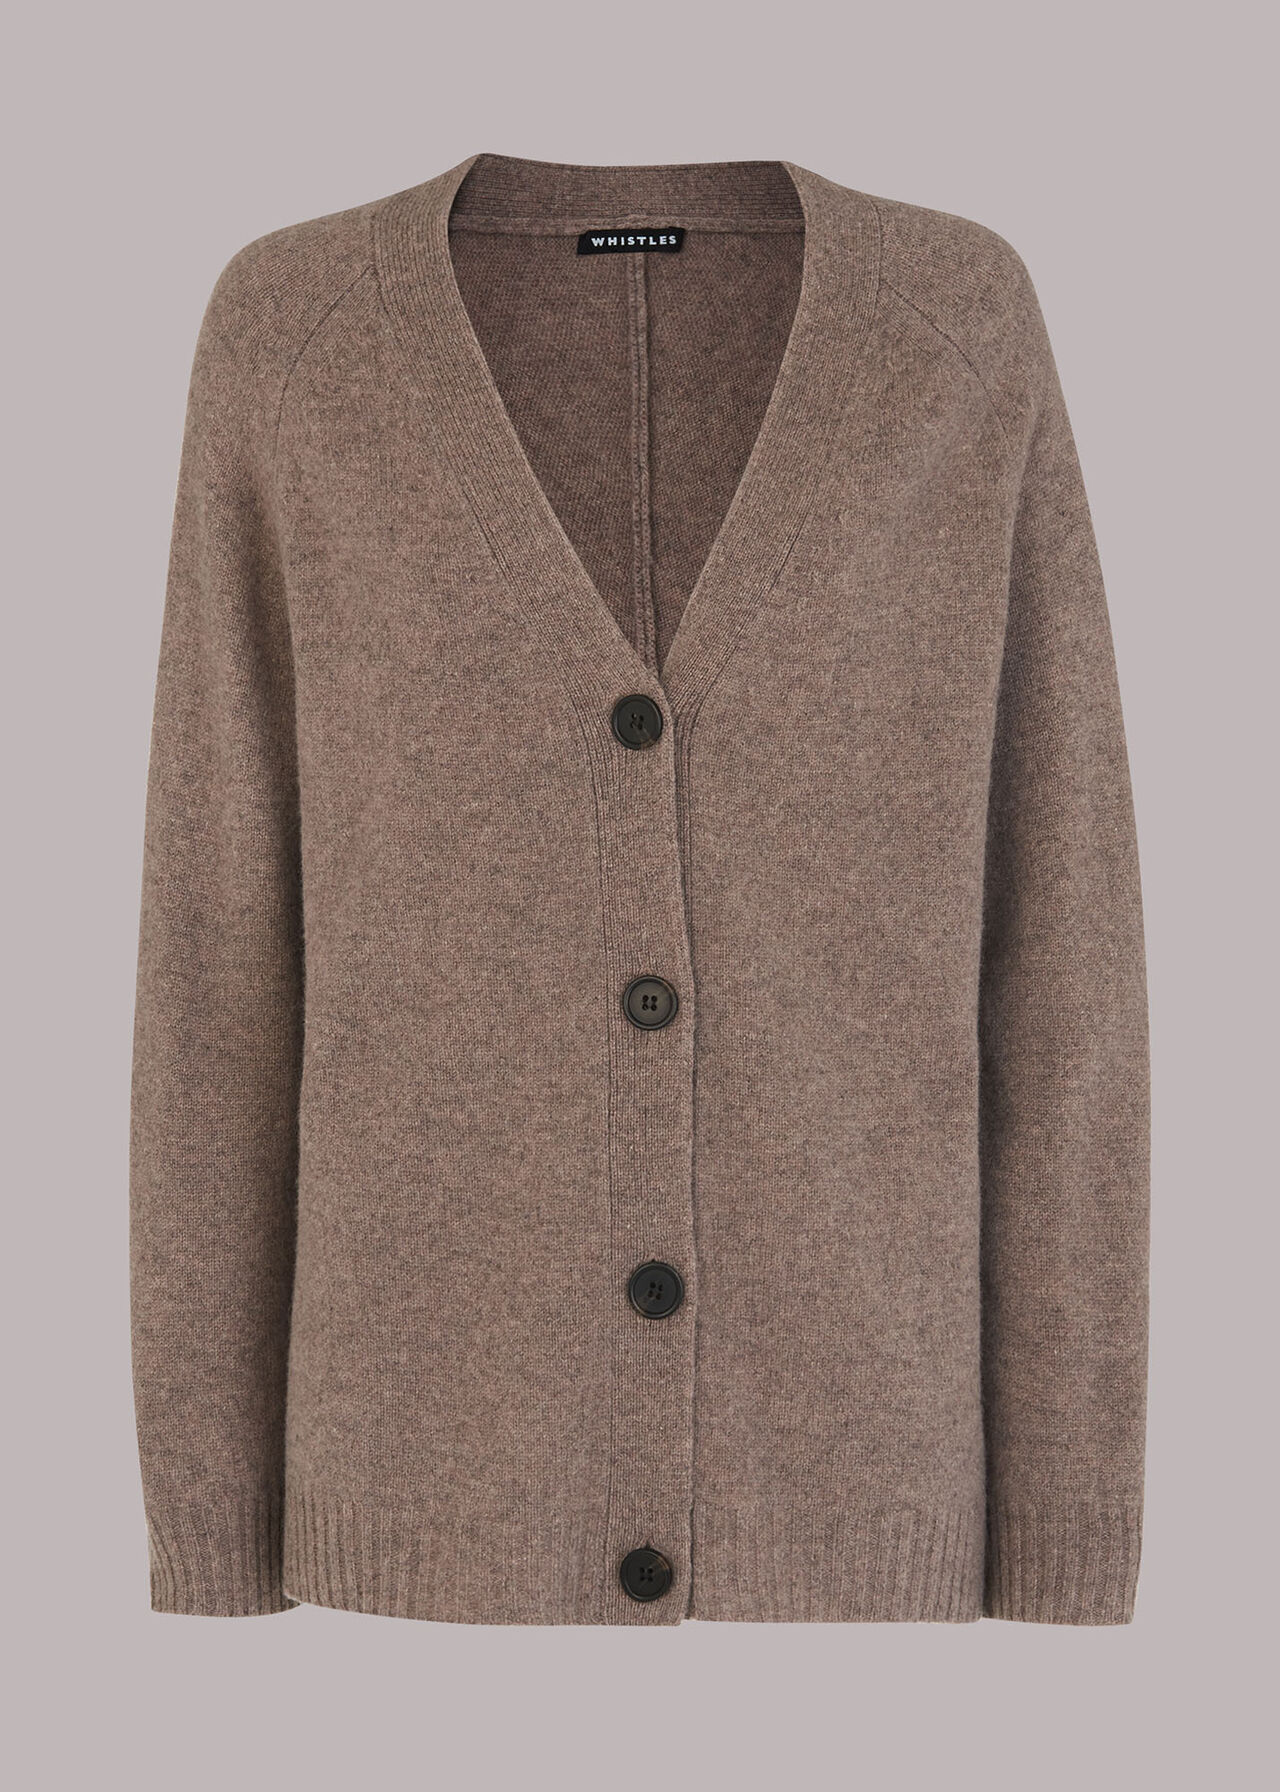 Grey Long Line Pocket Wool Cardigan, WHISTLES